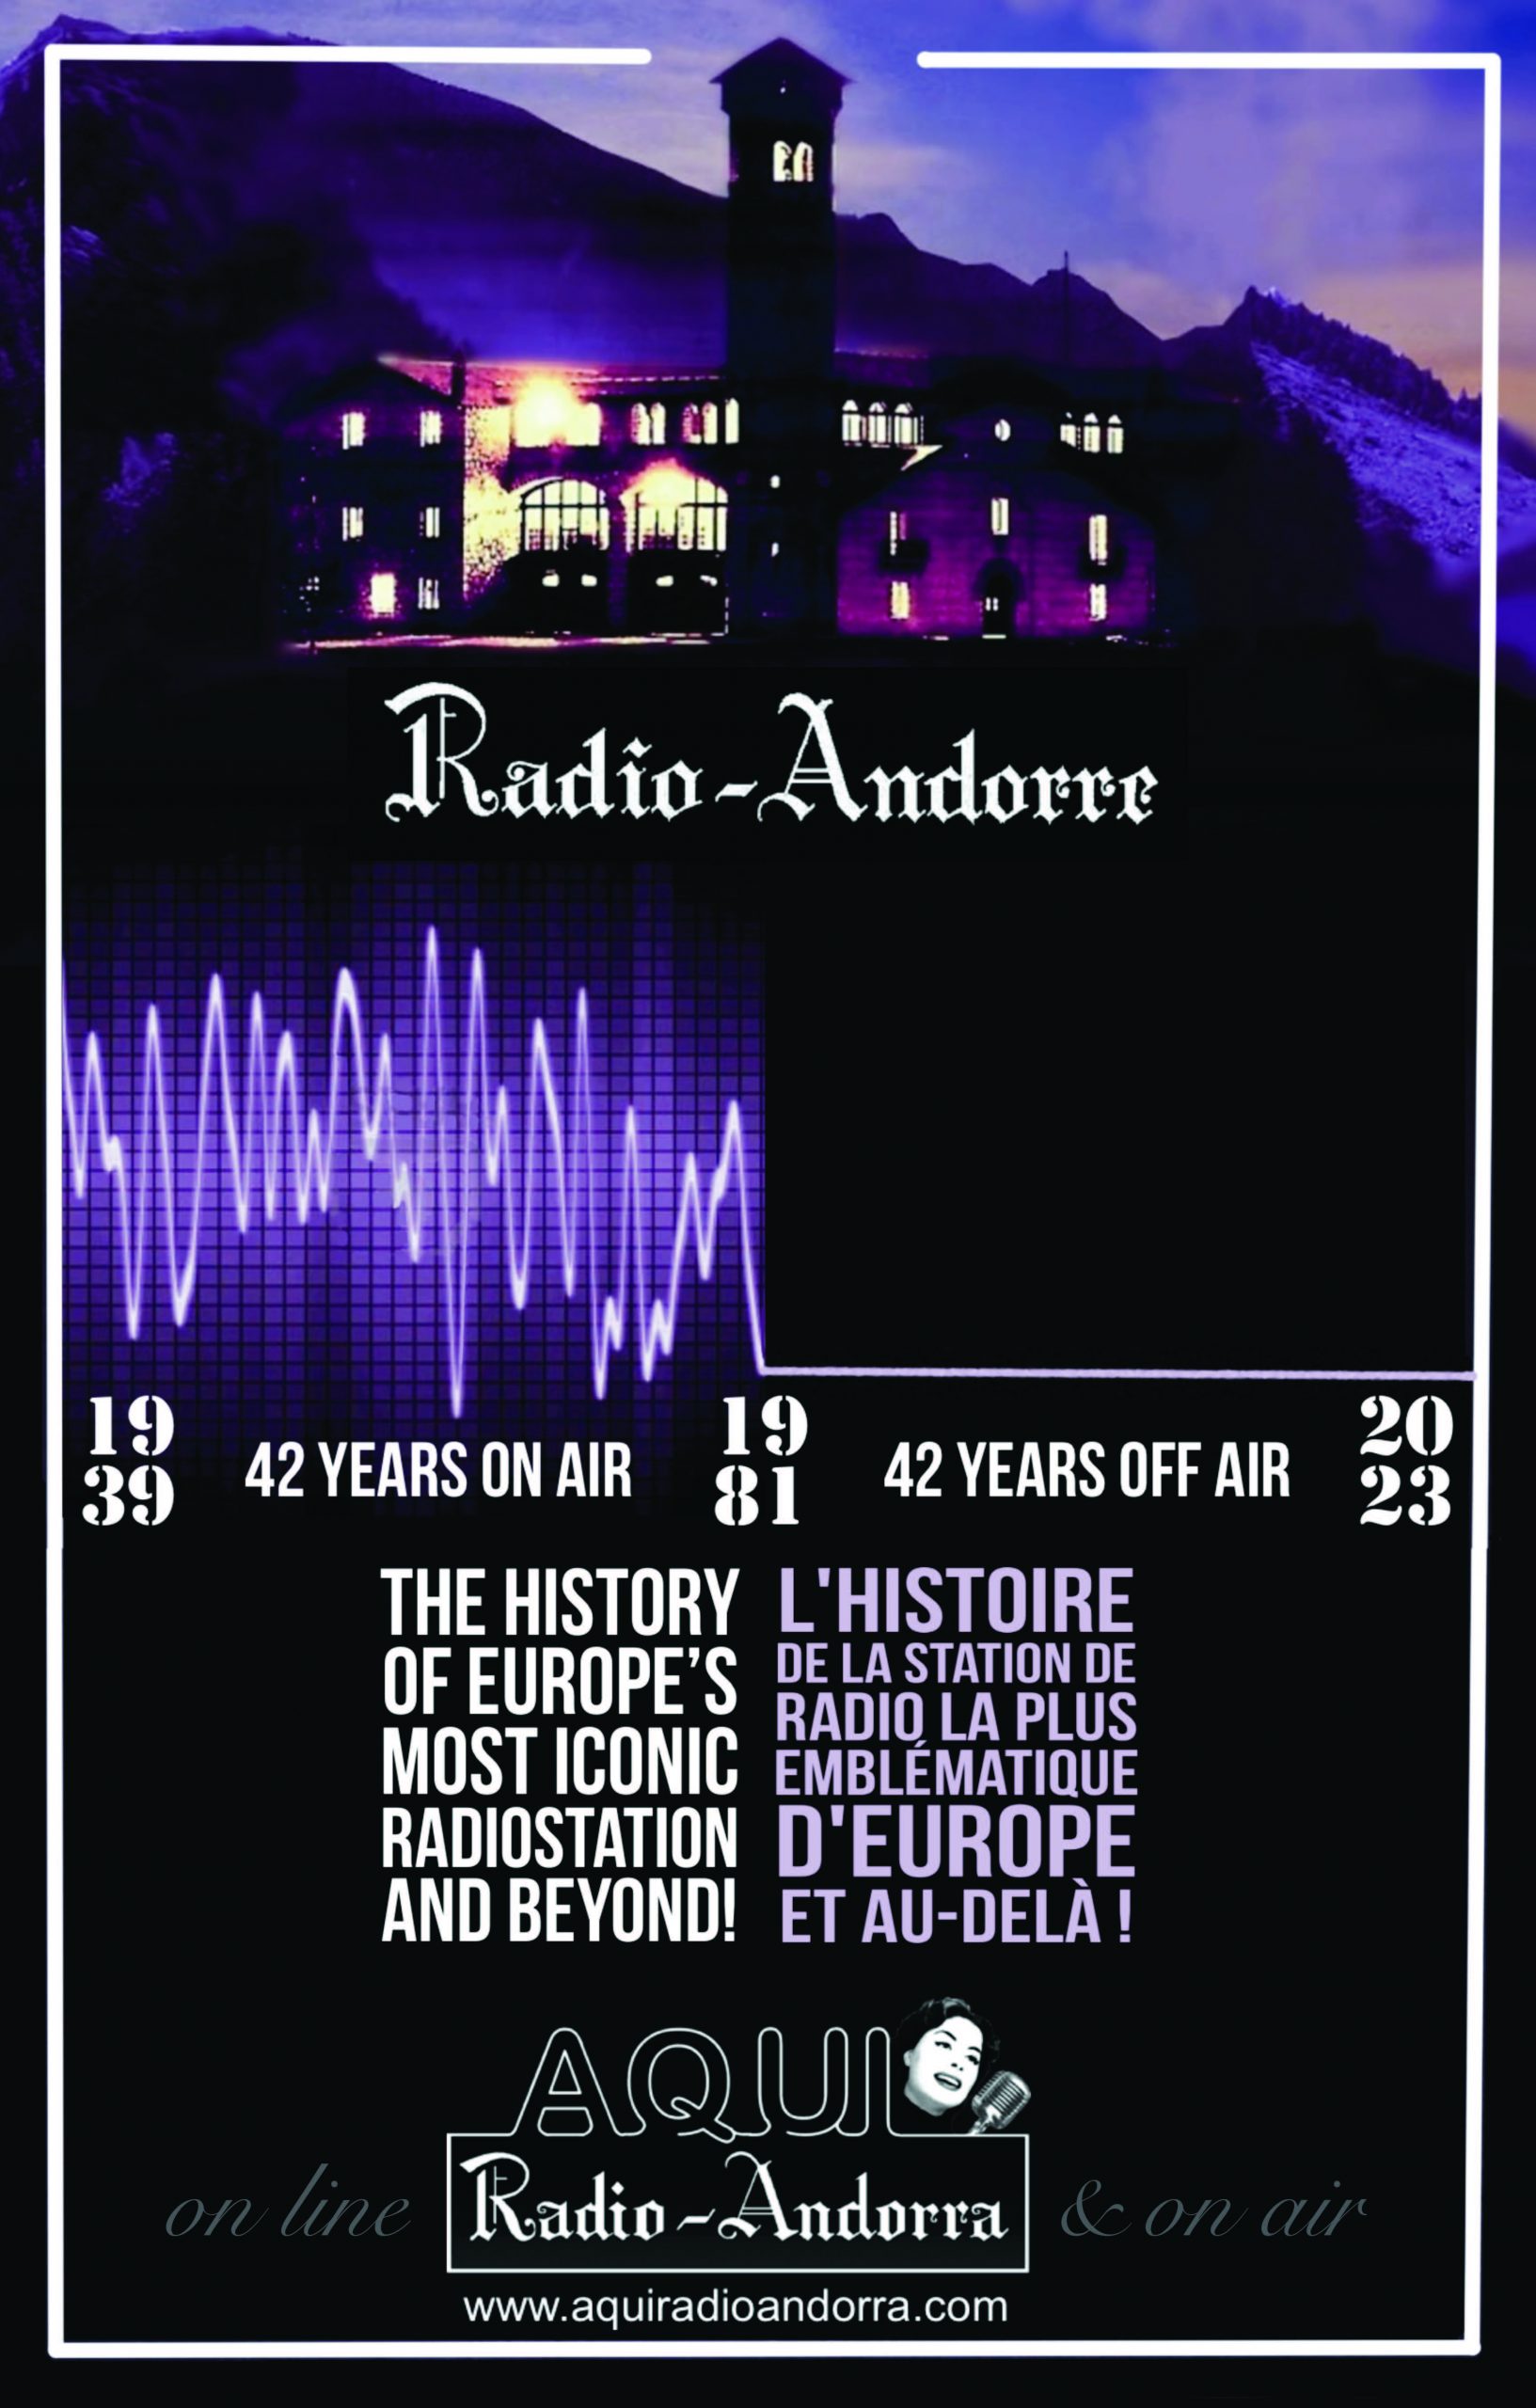 Advertisement for Radio Andorra's history